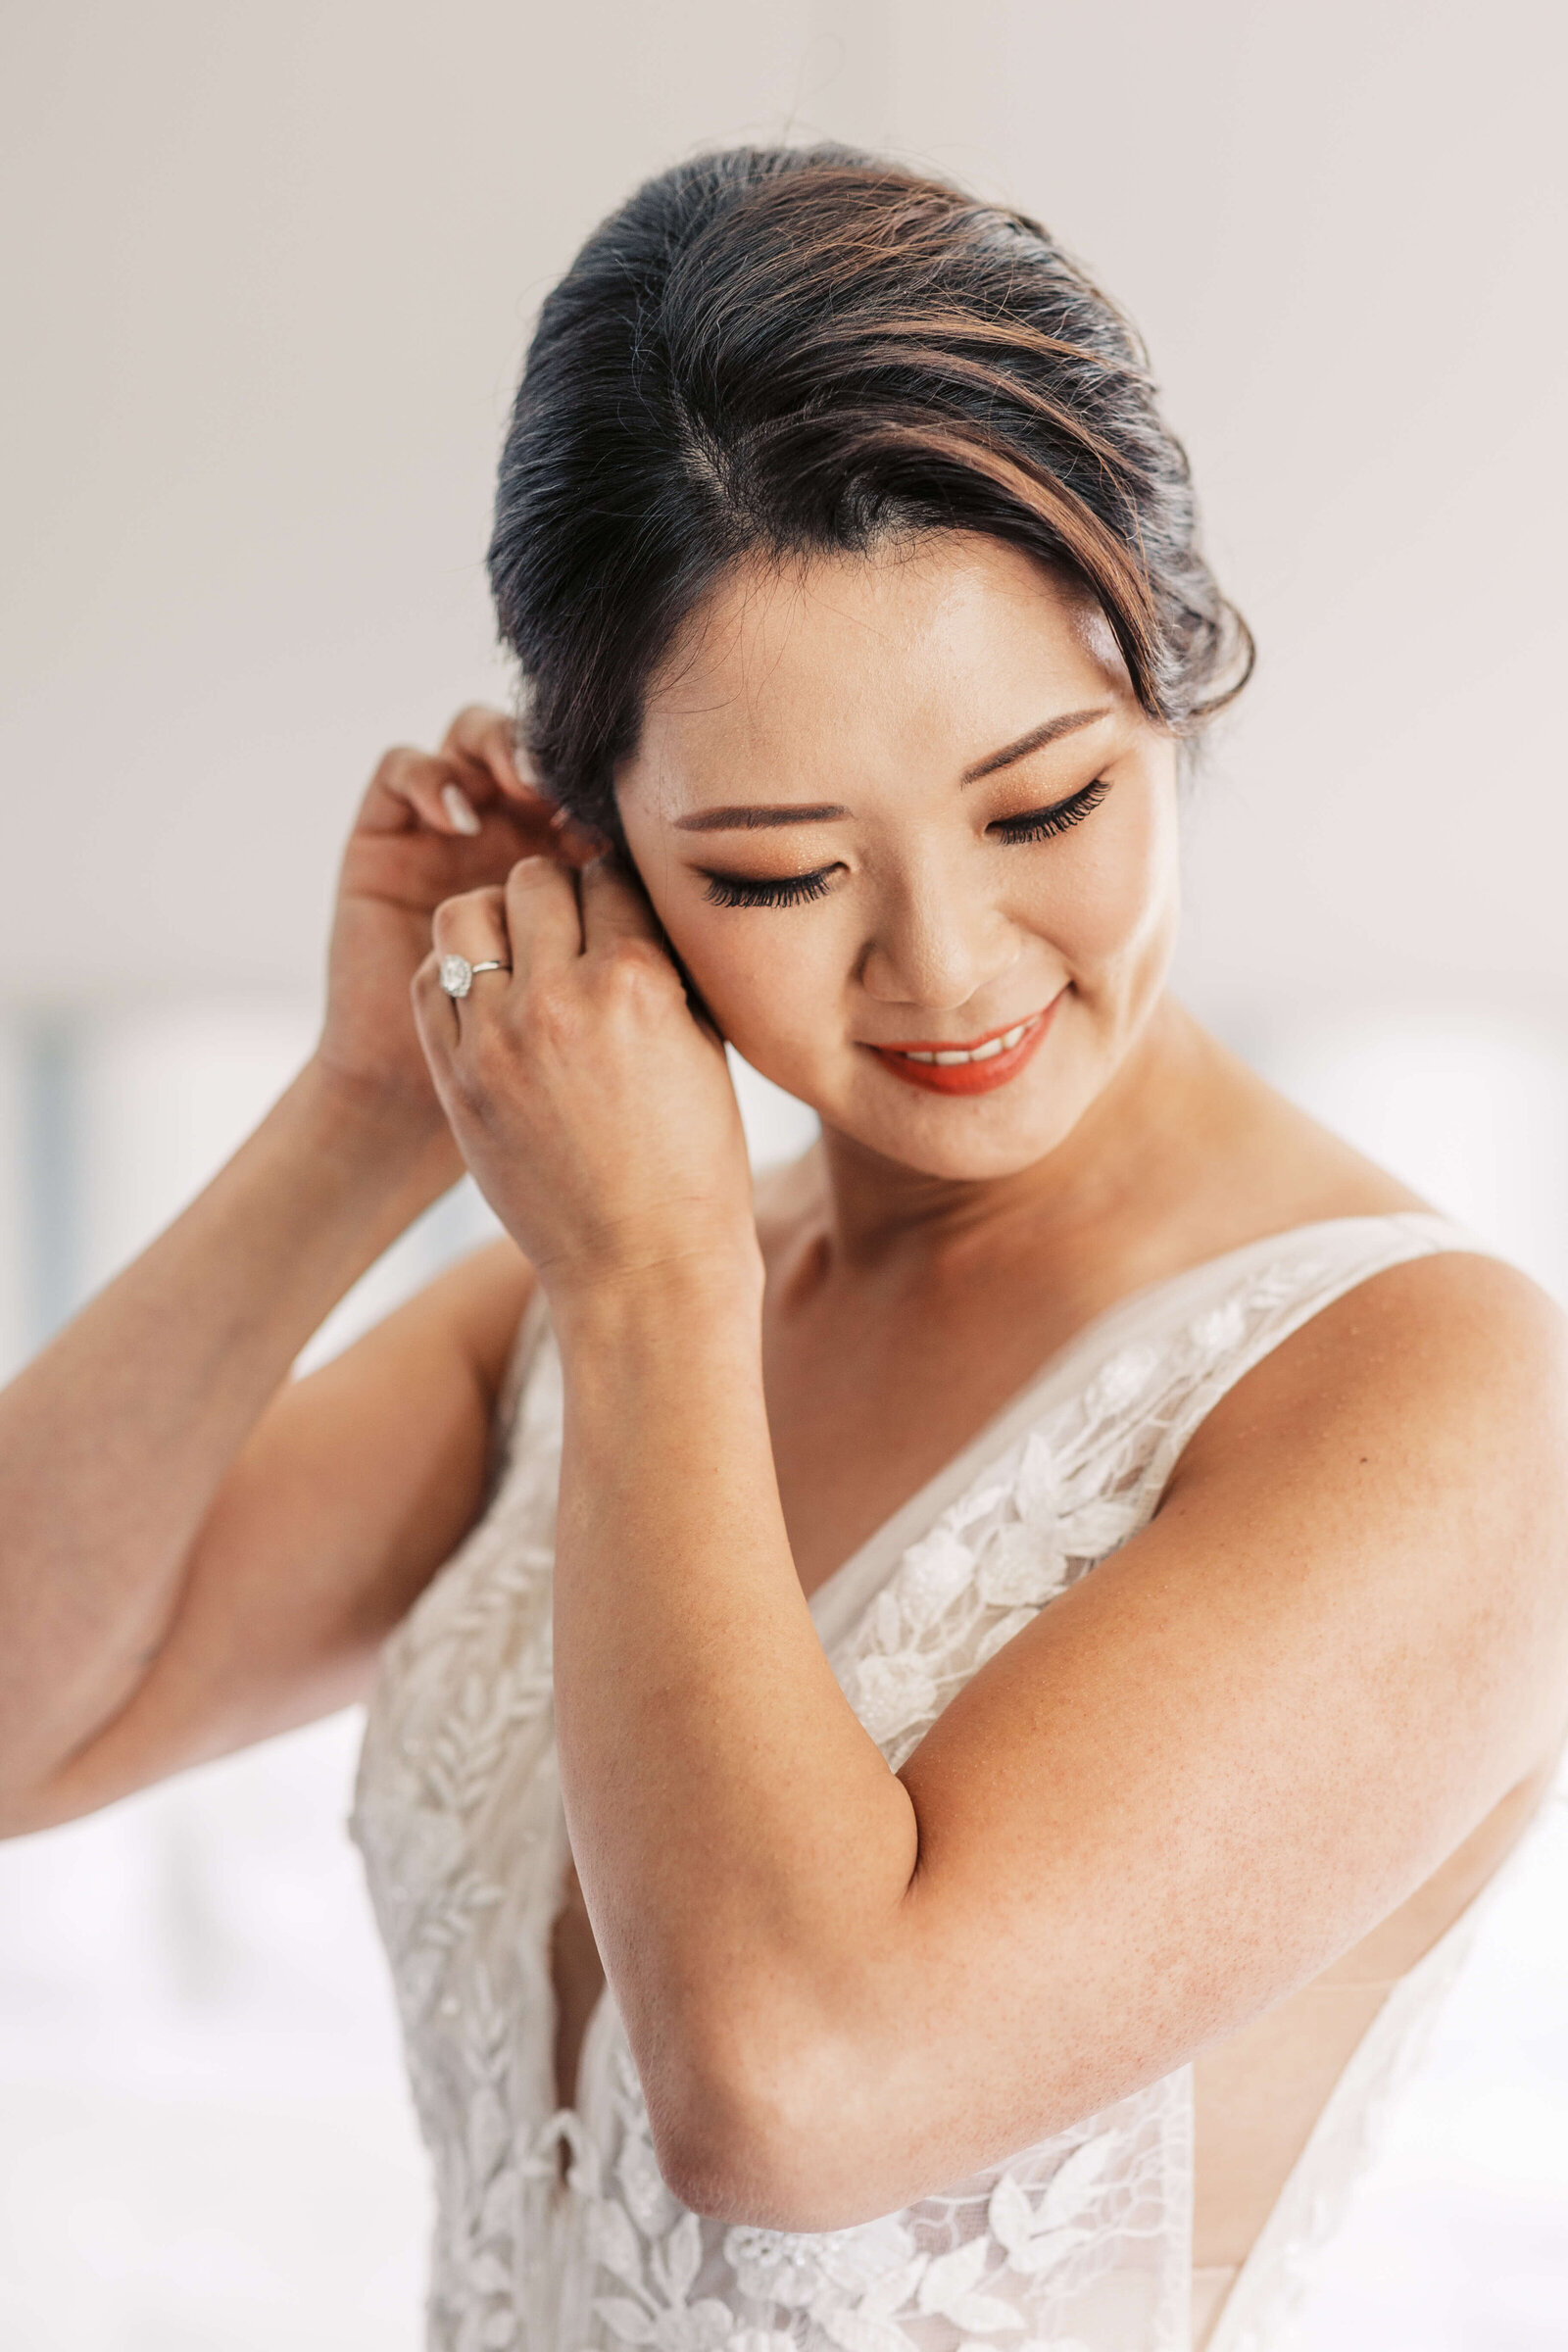 Bride puts on her diamond earrings.